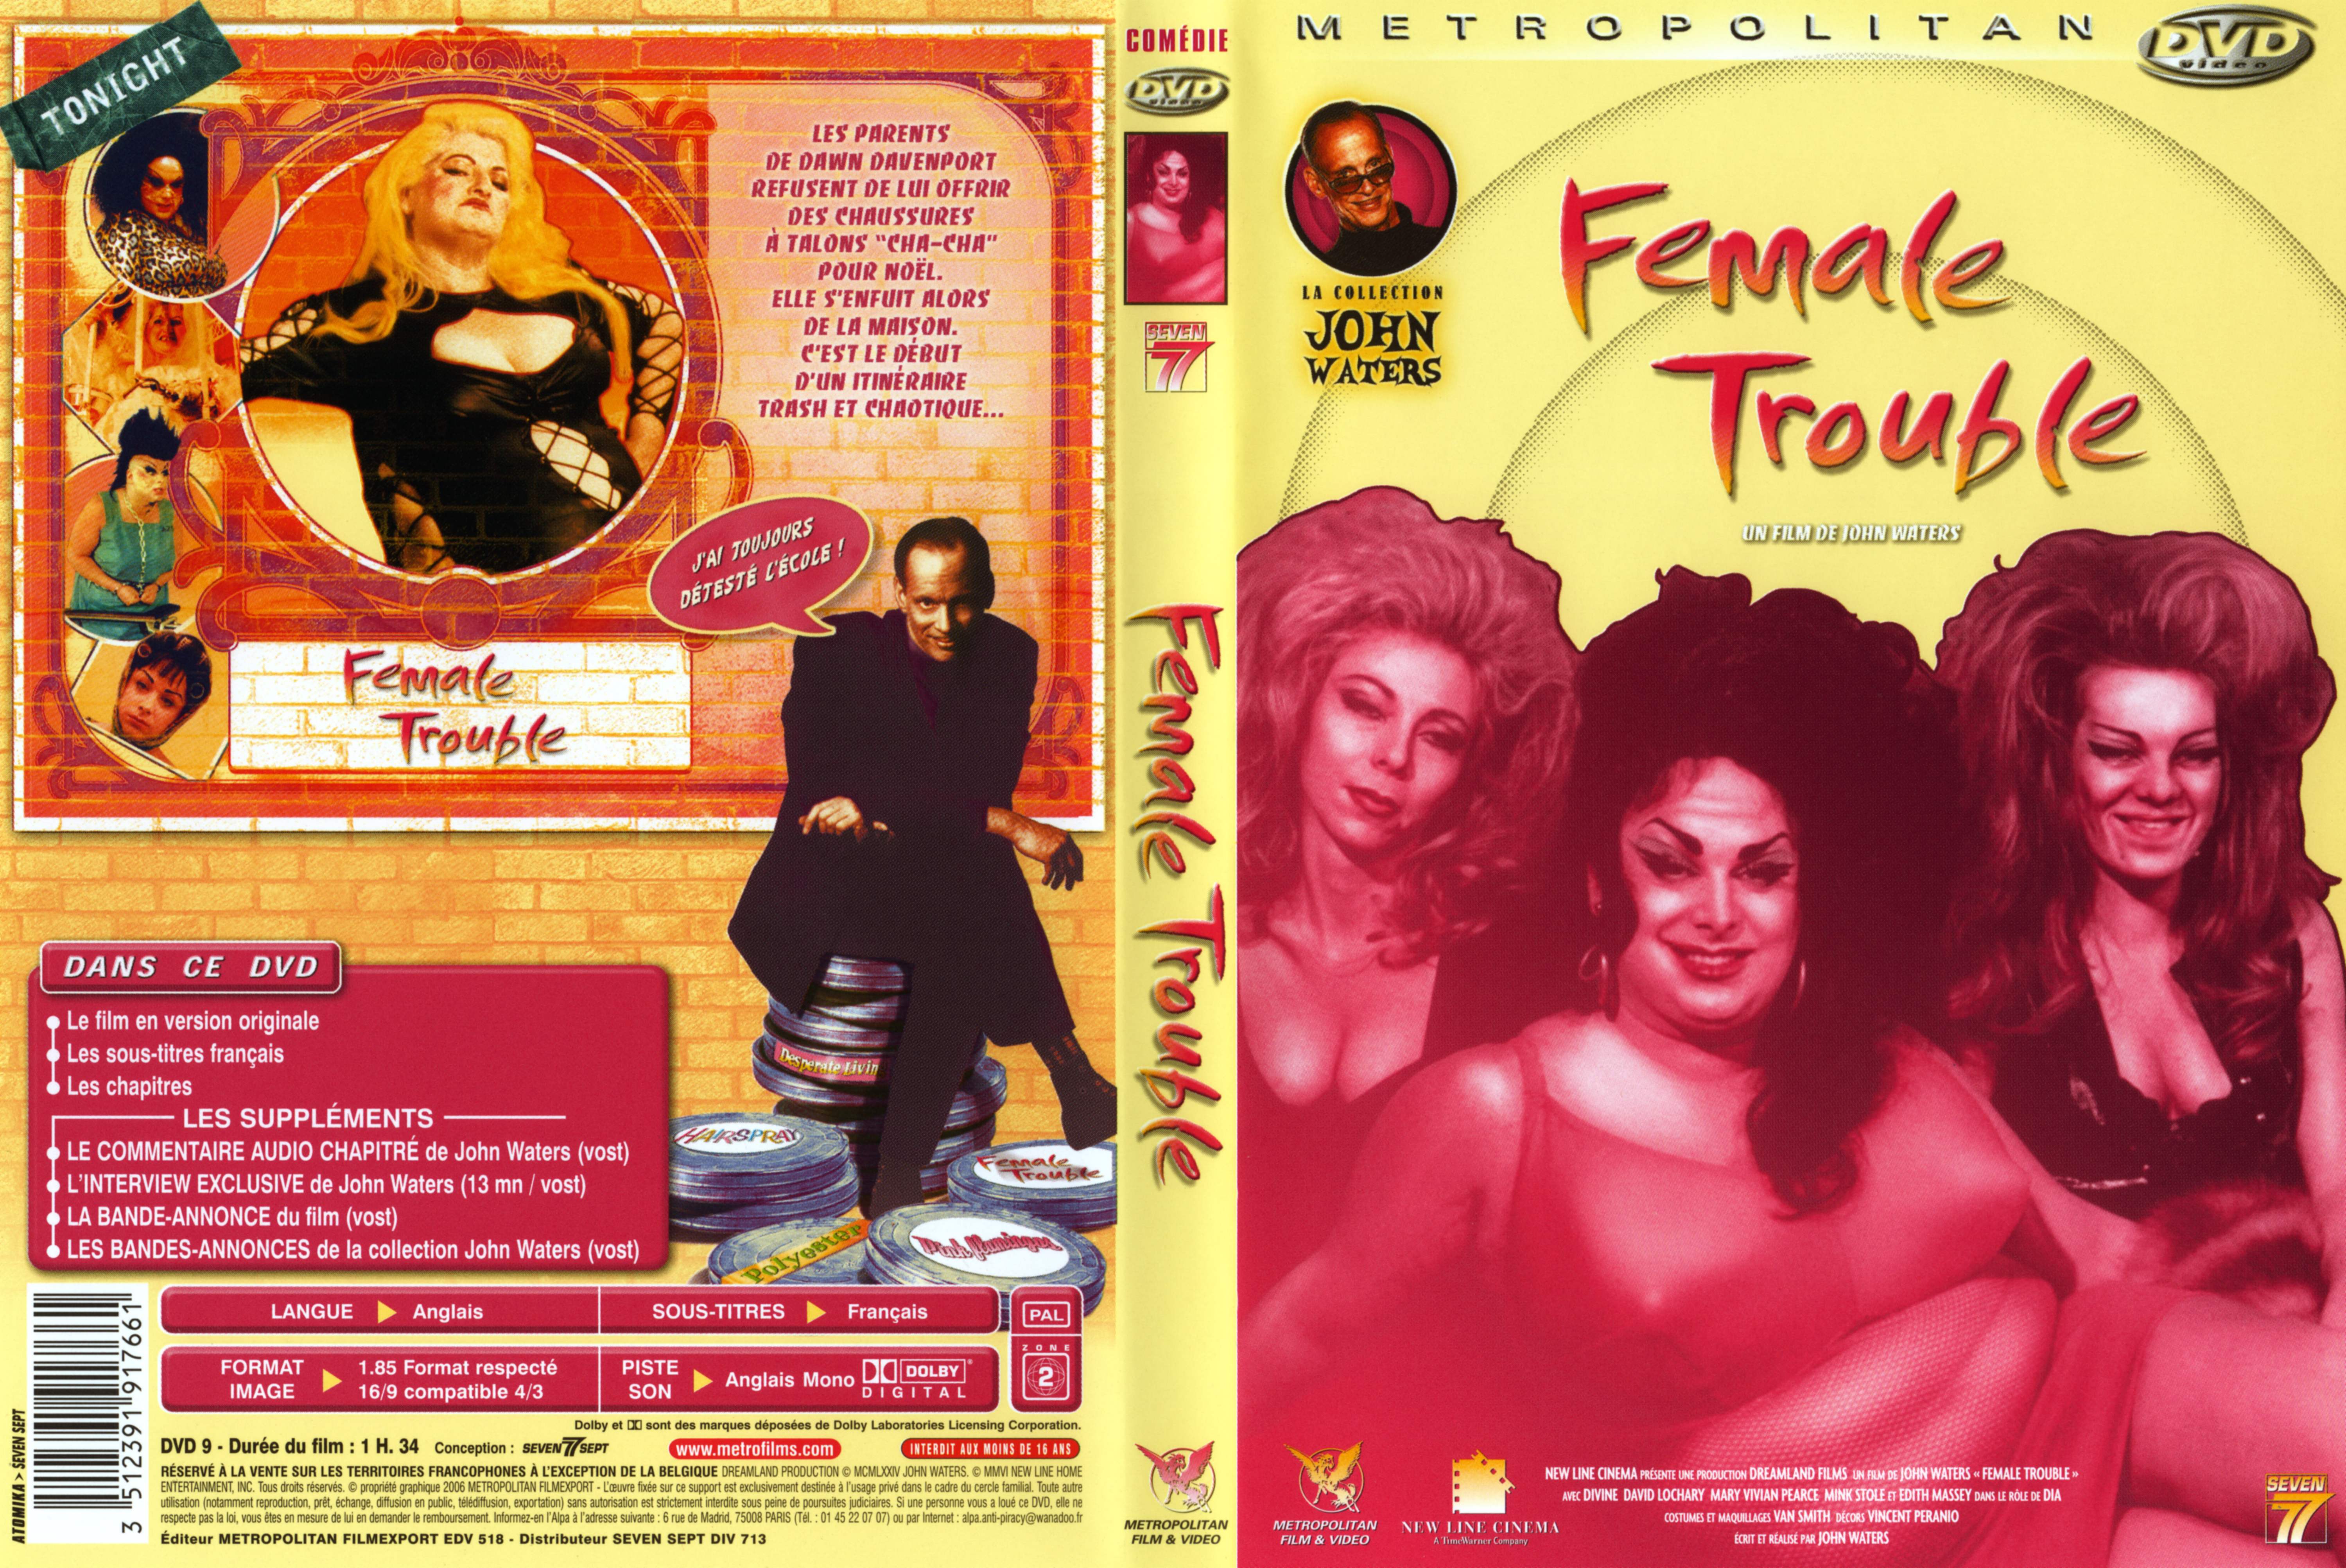 Jaquette DVD Female trouble